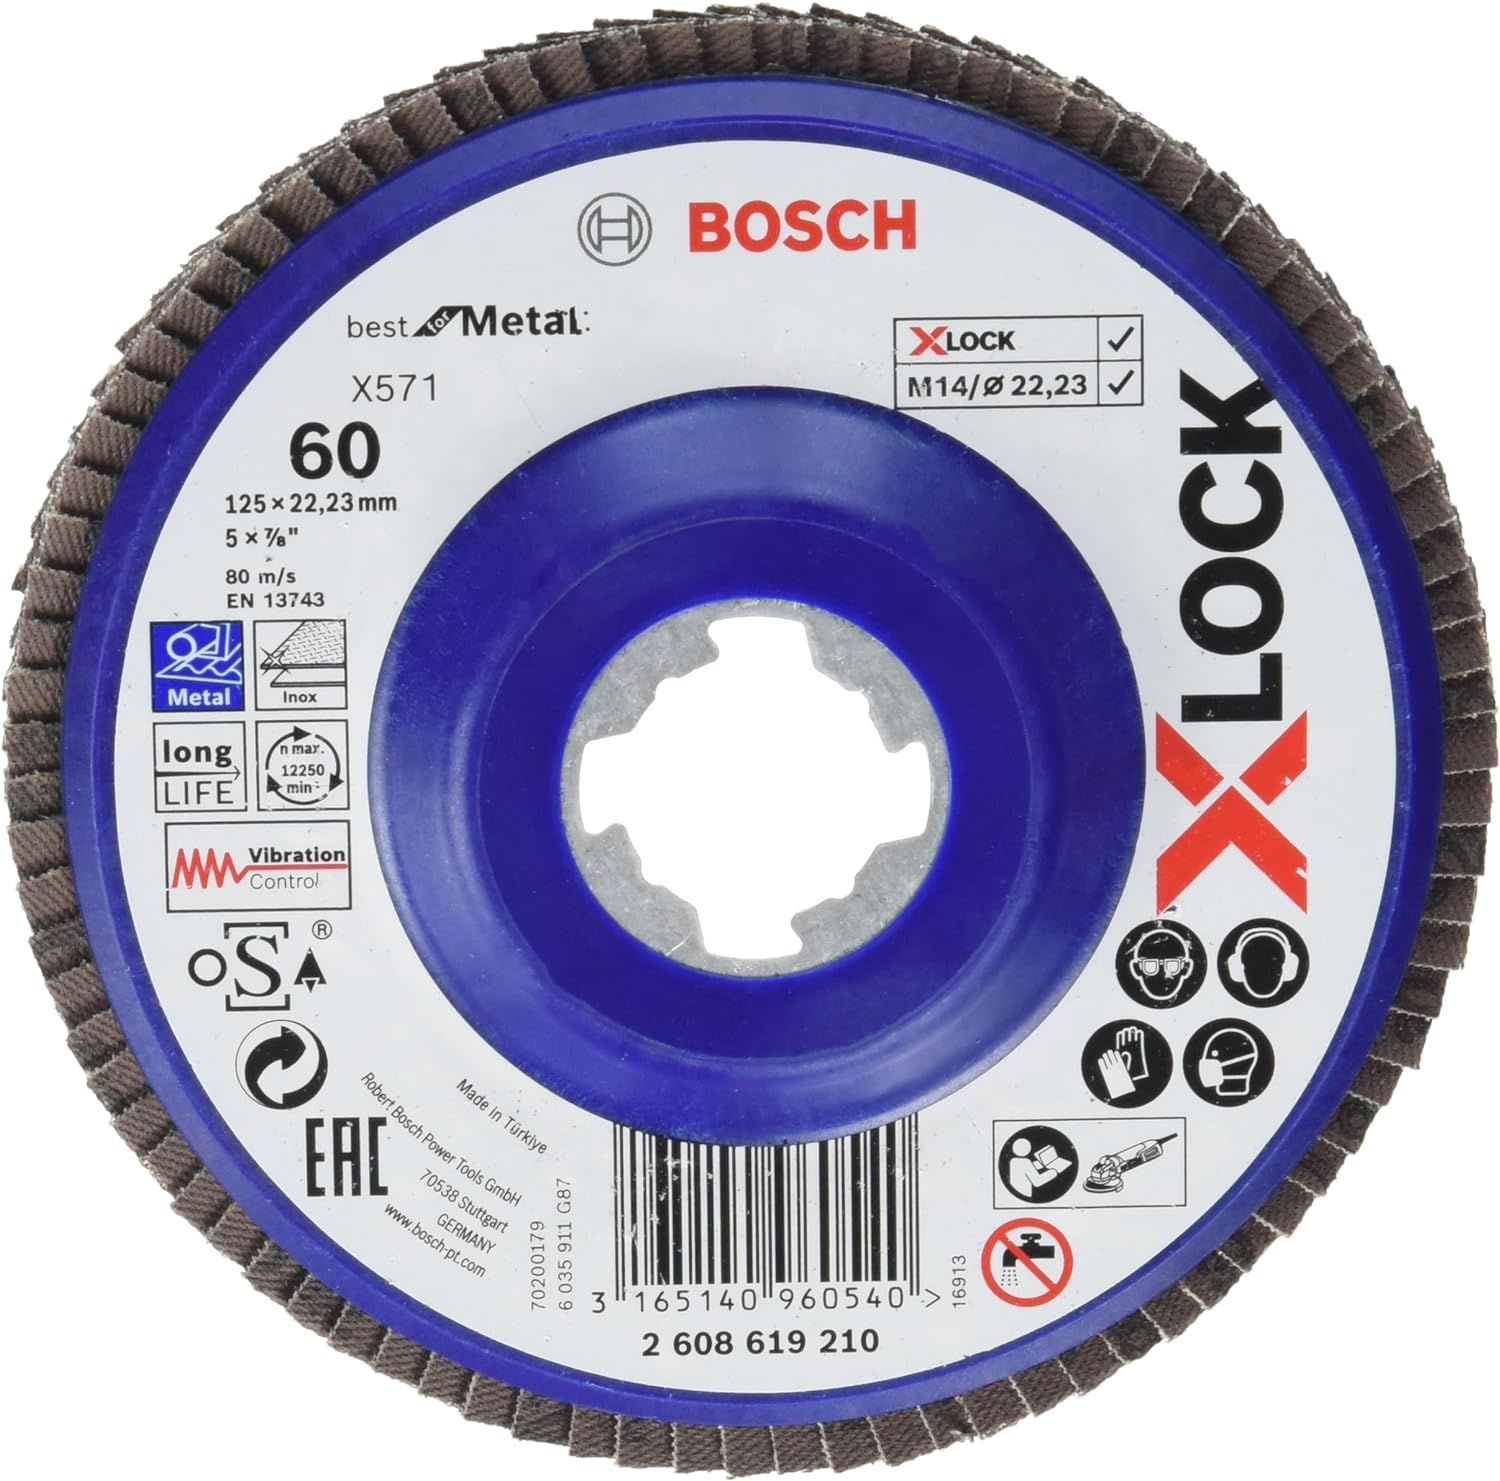 Bosch X-Lock Flap Disk BestforMetal 125 mm 120 Kum - 2608619212